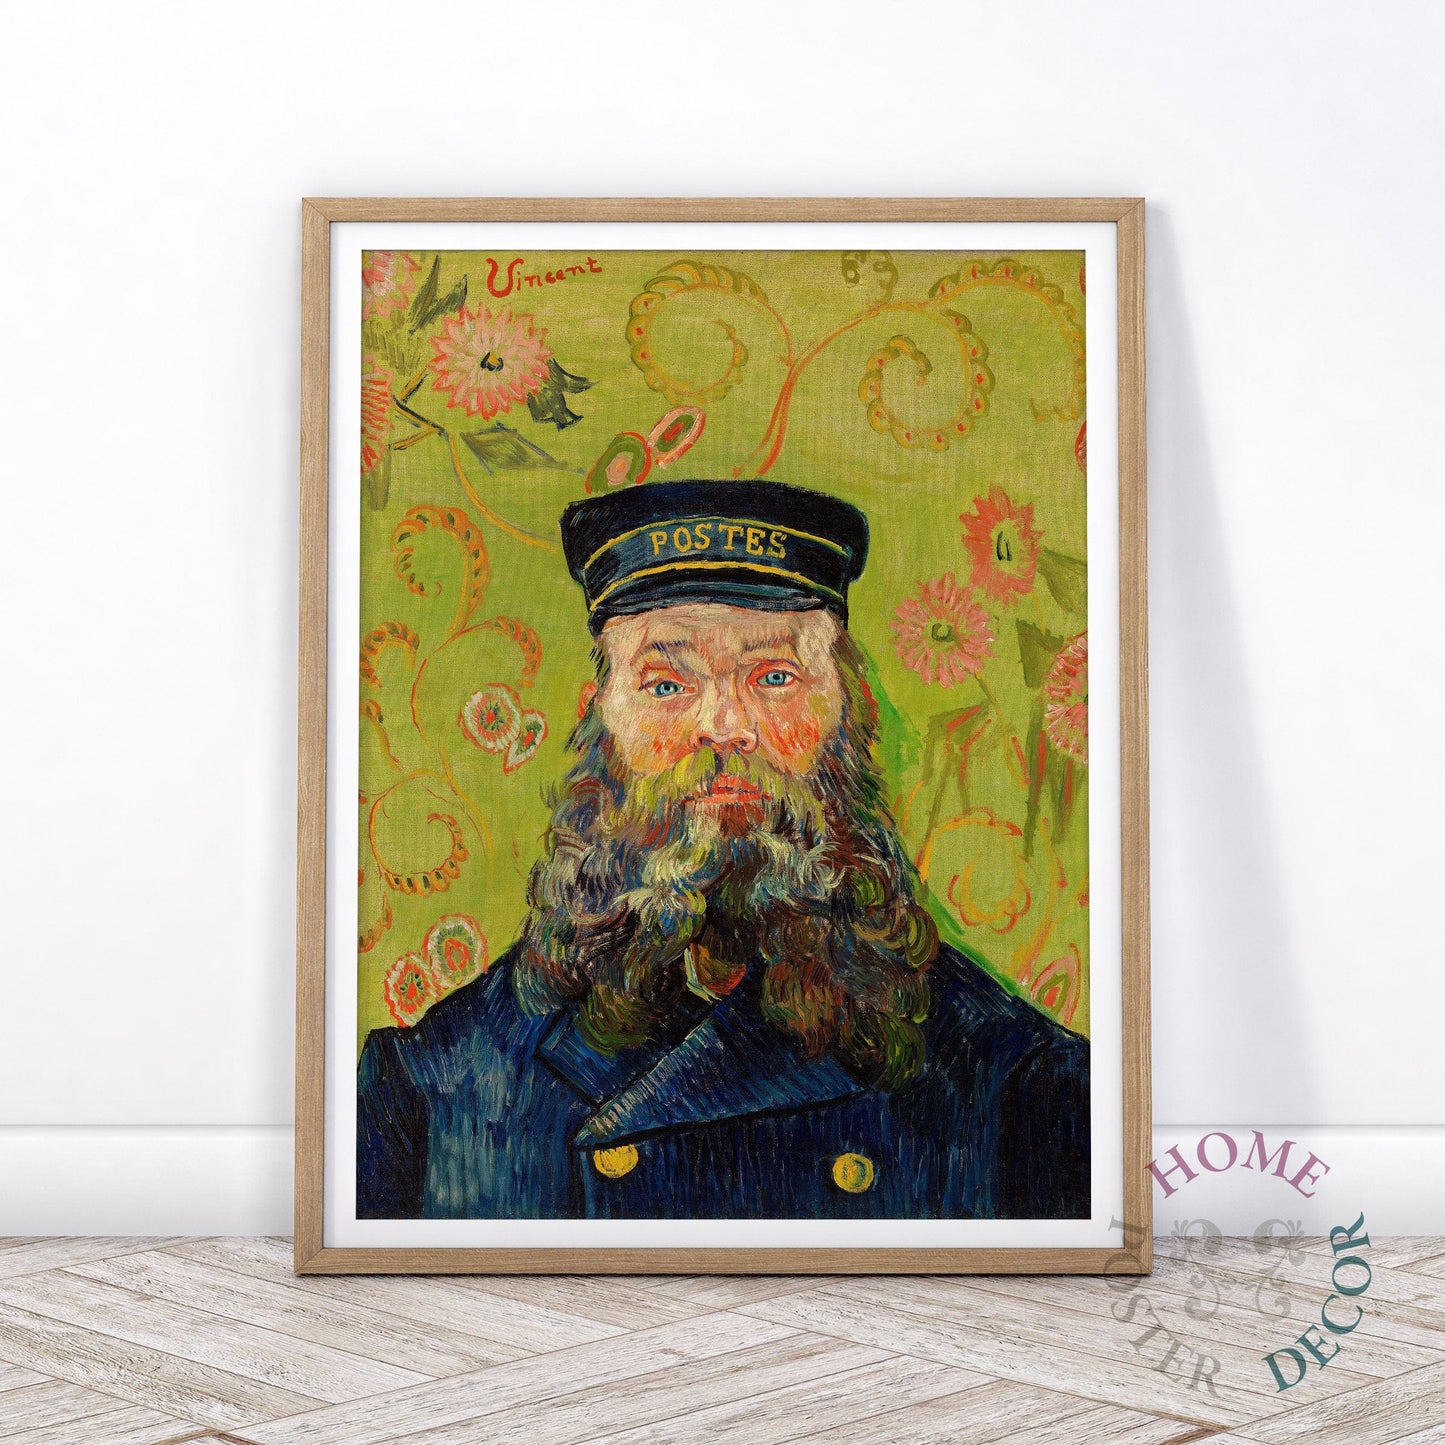 Home Poster Decor Vincent Van Gogh, Van Gogh Portrait, The Postman, Joseph Roulin 1888, Van Gogh Sunflowers, Post-impressionist